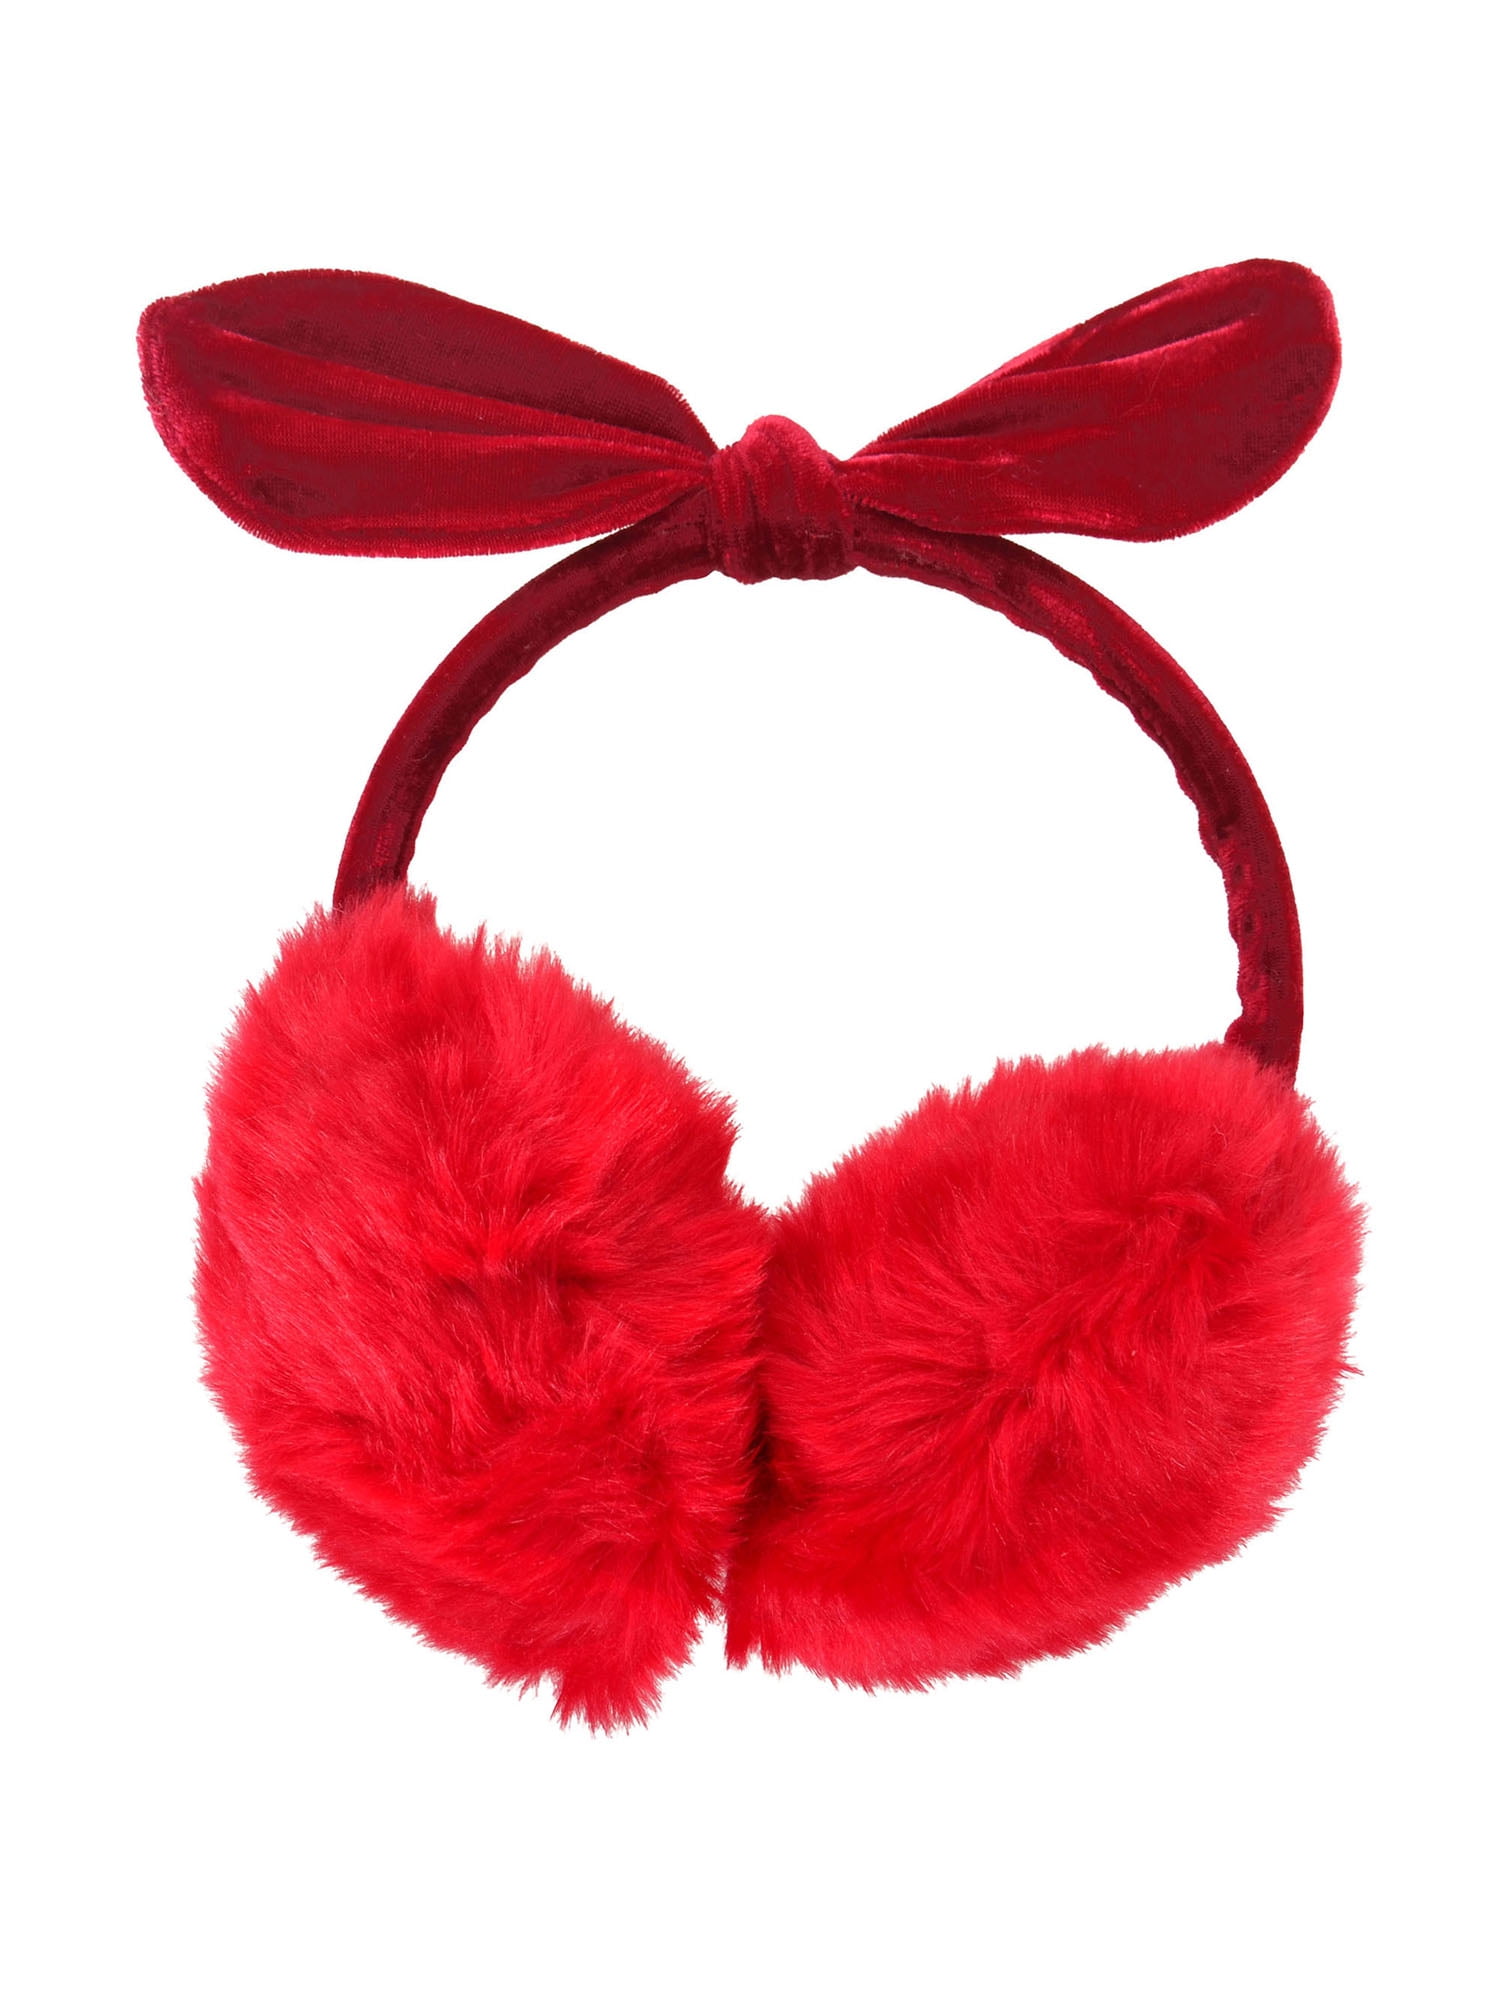 Winter Earmuffs Unisex Fashion Ear Warmers Cute Back-wear Earmuffs Red Checkered 